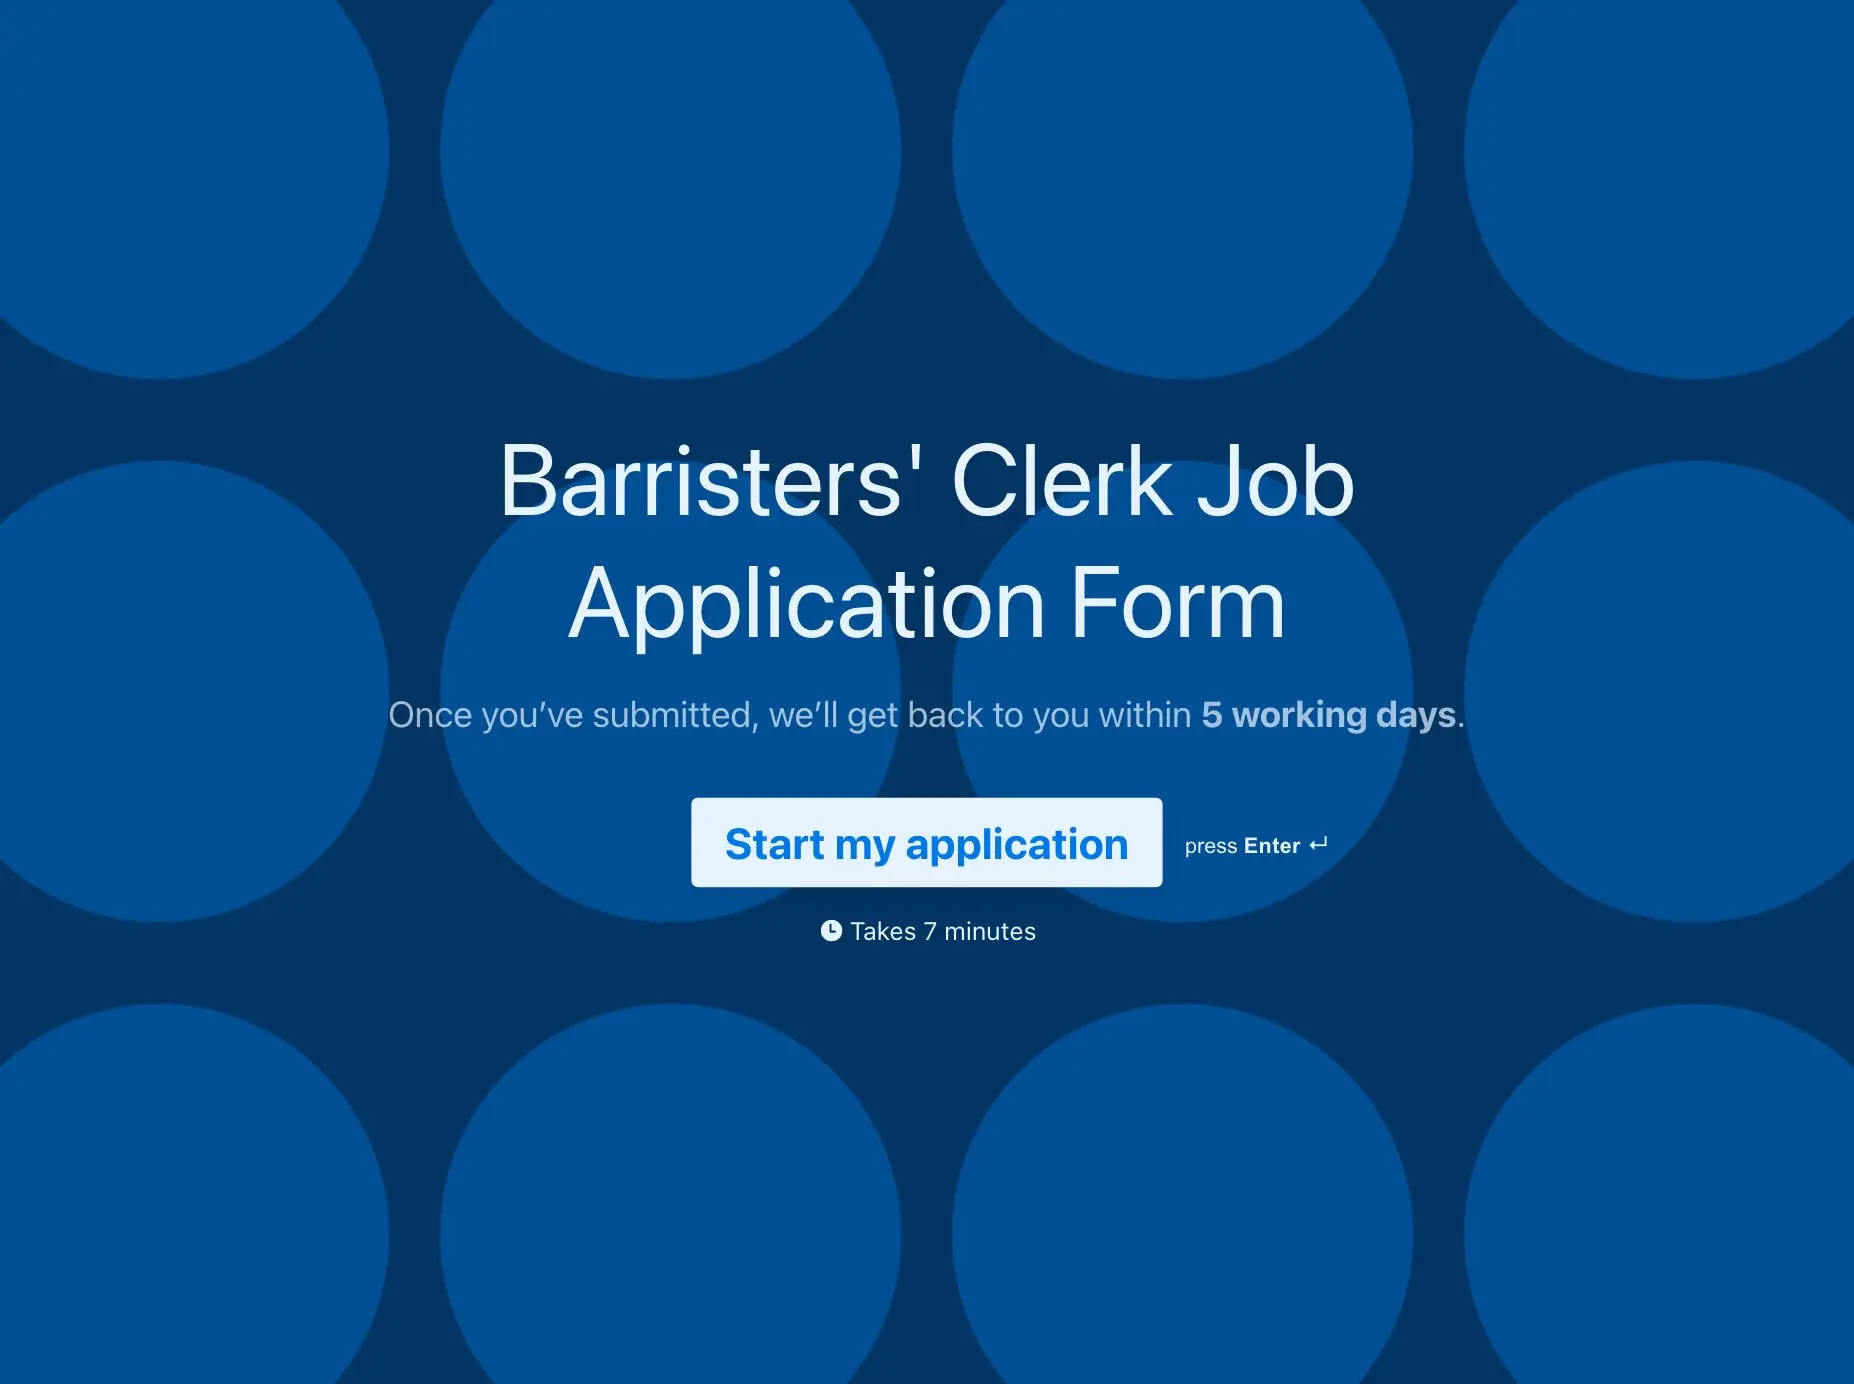 Barristers' Clerk Job Application Form Template Hero